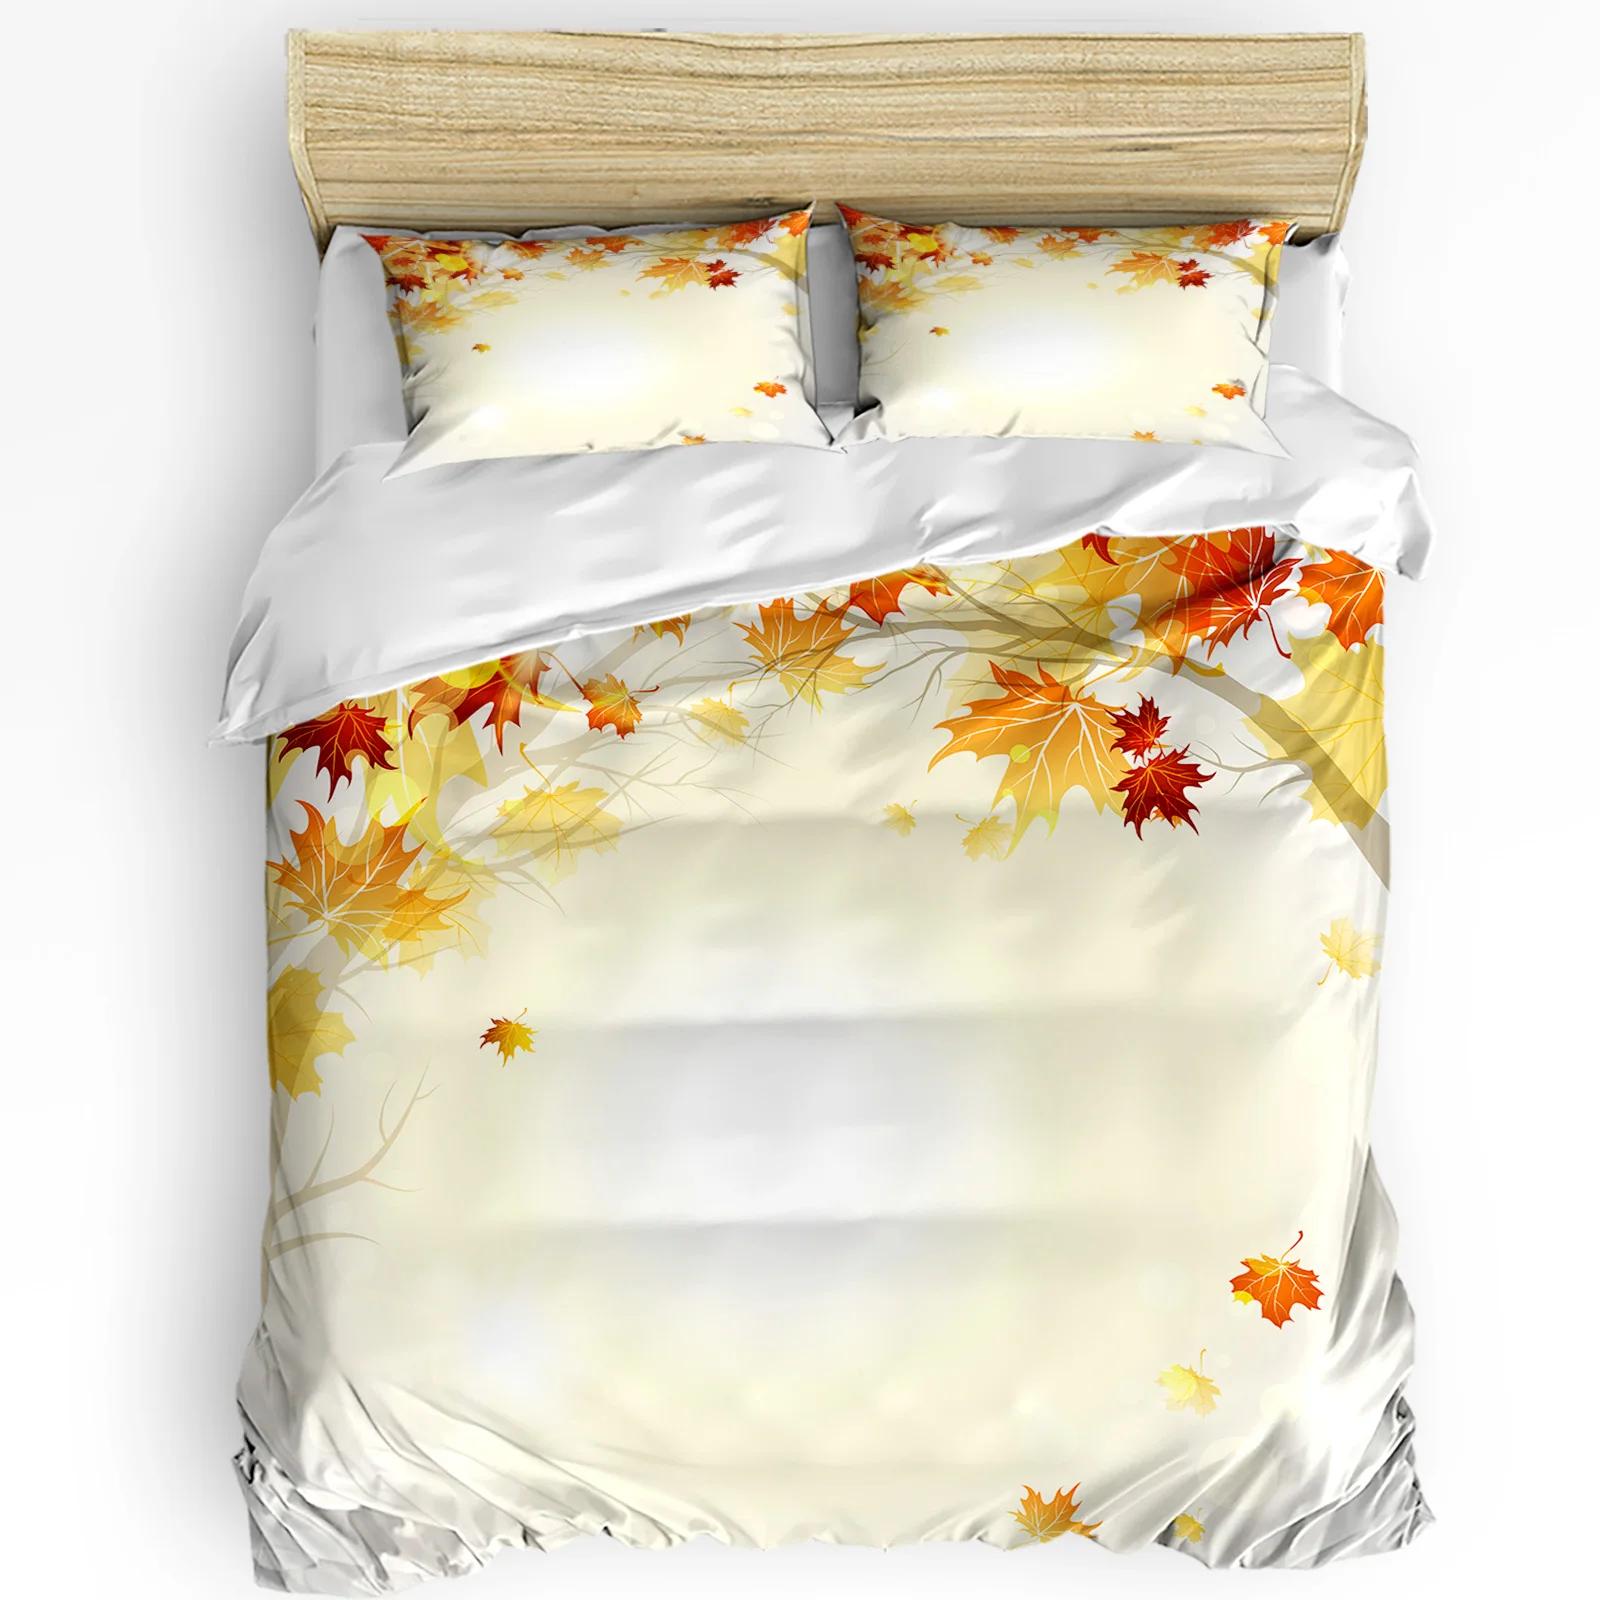 Autumn Leaves Yellow Maple Leaf Bedding Set 3pcs Duvet Cover Pillowcase Kids Adult Quilt Cover Double Bed Set Home T